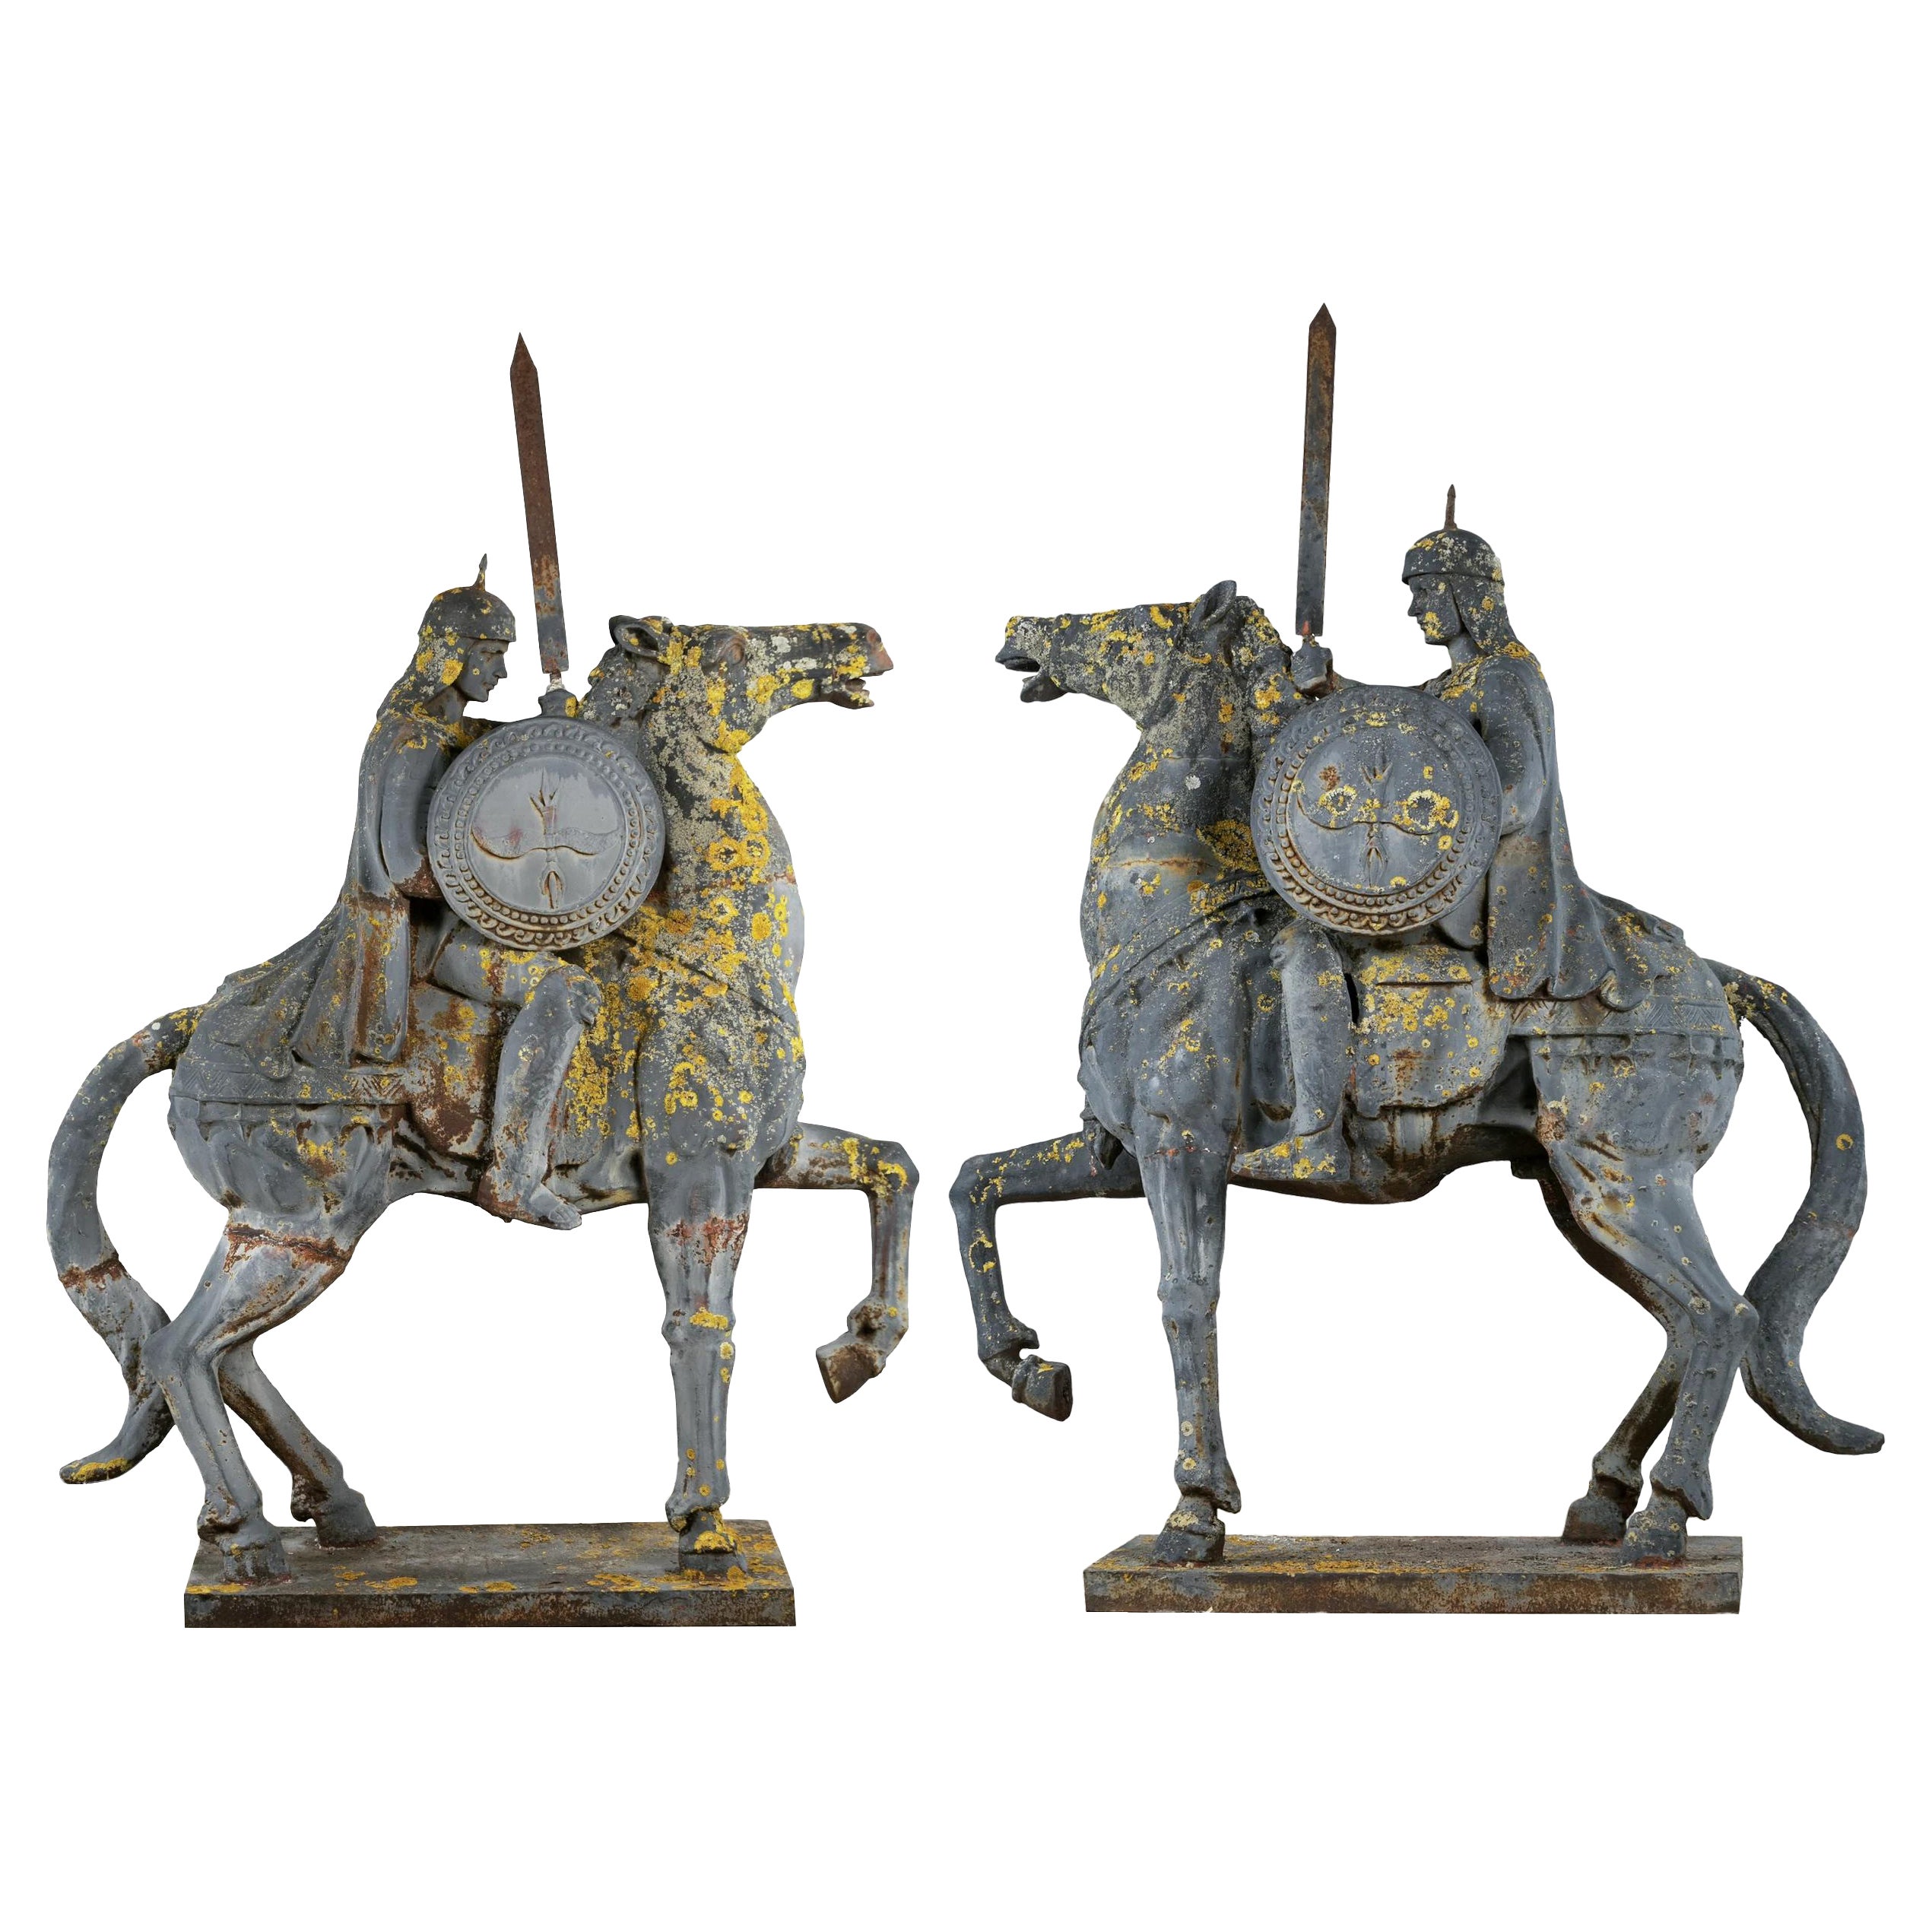 Two Ottoman horsemen, large cast iron garden statues pendant, France, circa 1950